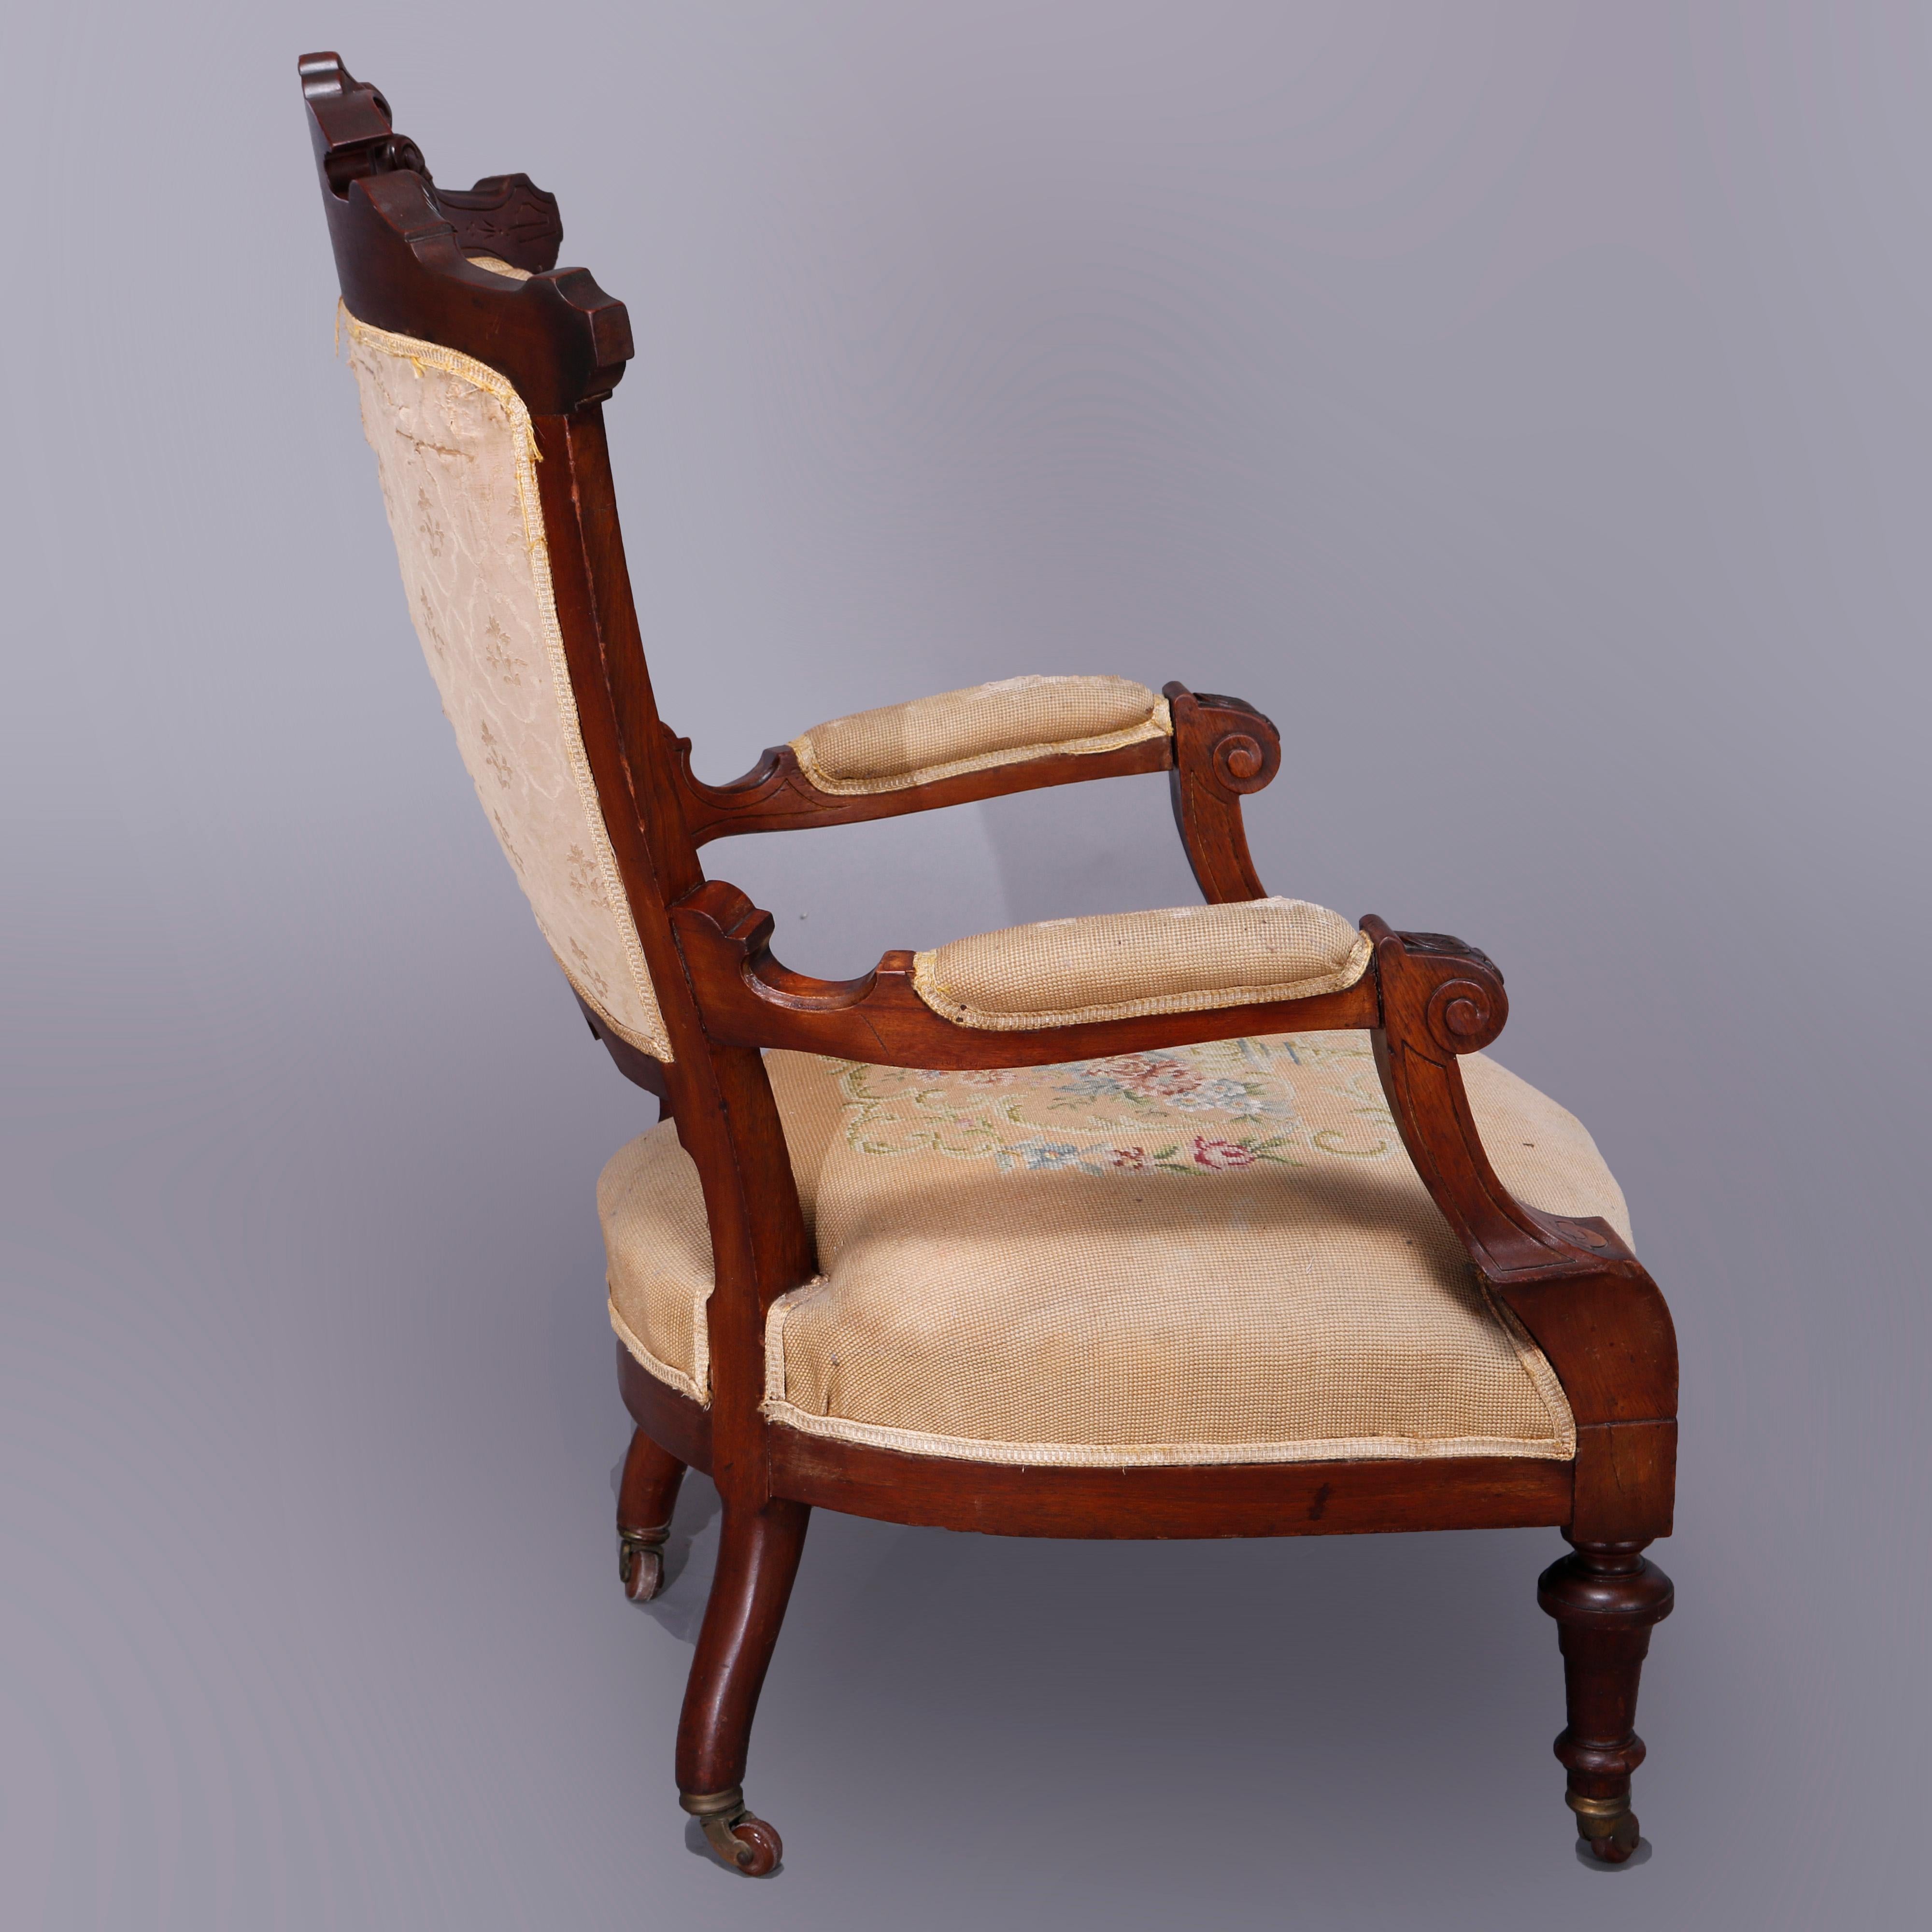 Carved Antique Renaissance Revival Walnut, Burl & Needlepoint Parlor Chairs, c1890 For Sale